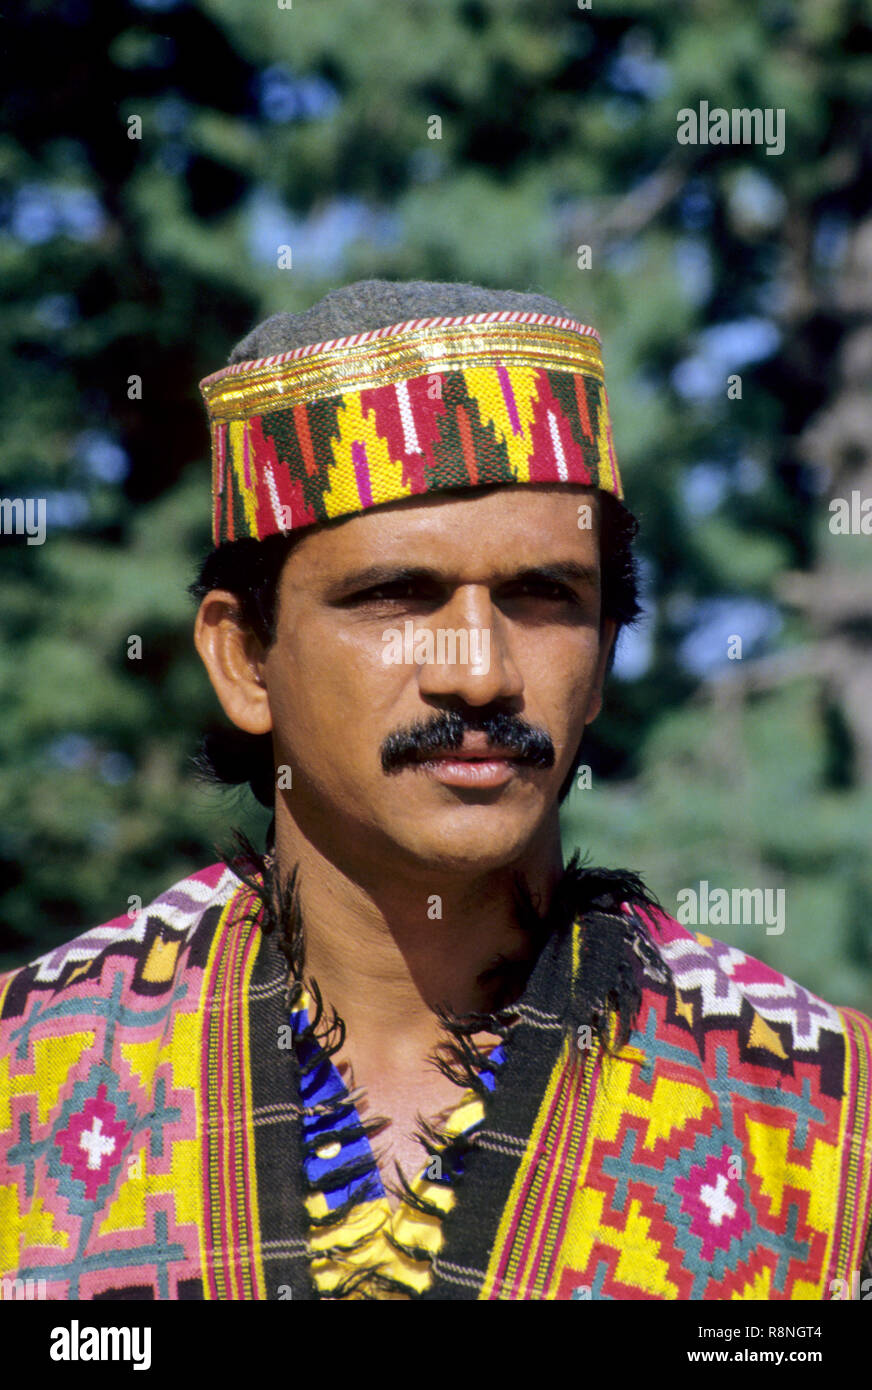 man of himachal pradesh, india Stock Photo - Alamy